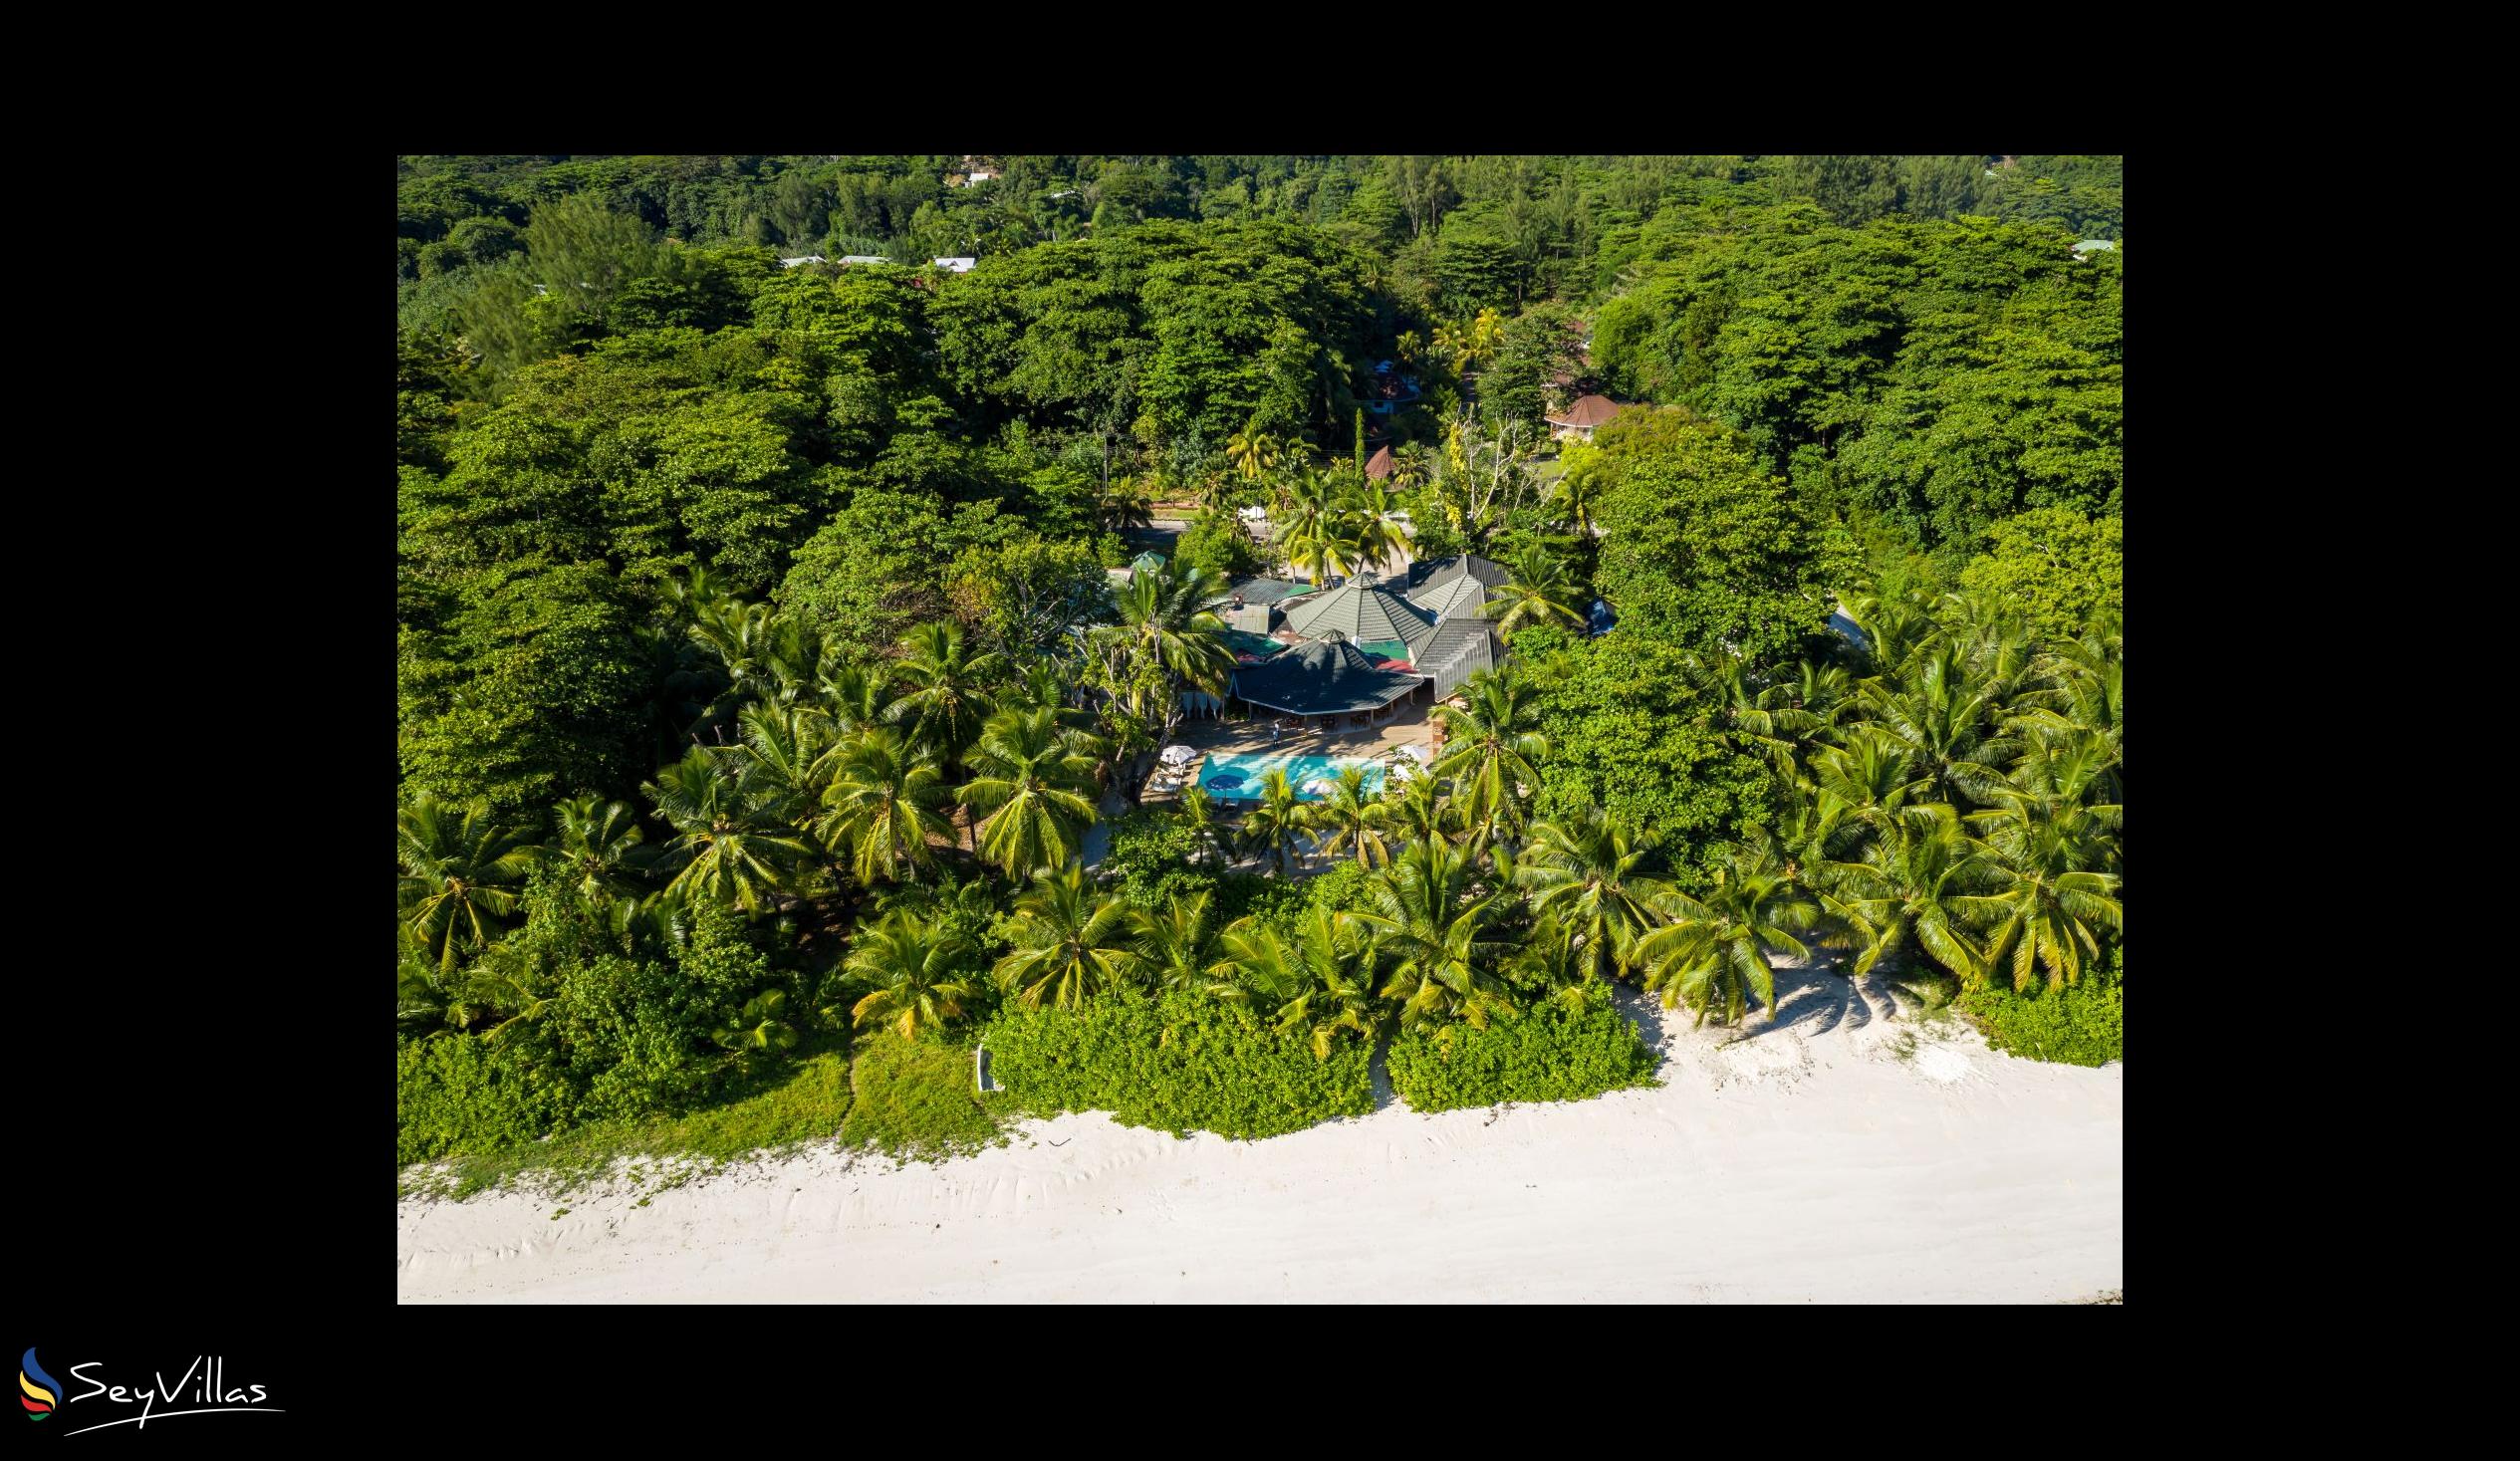 Photo 1: Bliss Hotel Praslin - Outdoor area - Praslin (Seychelles)